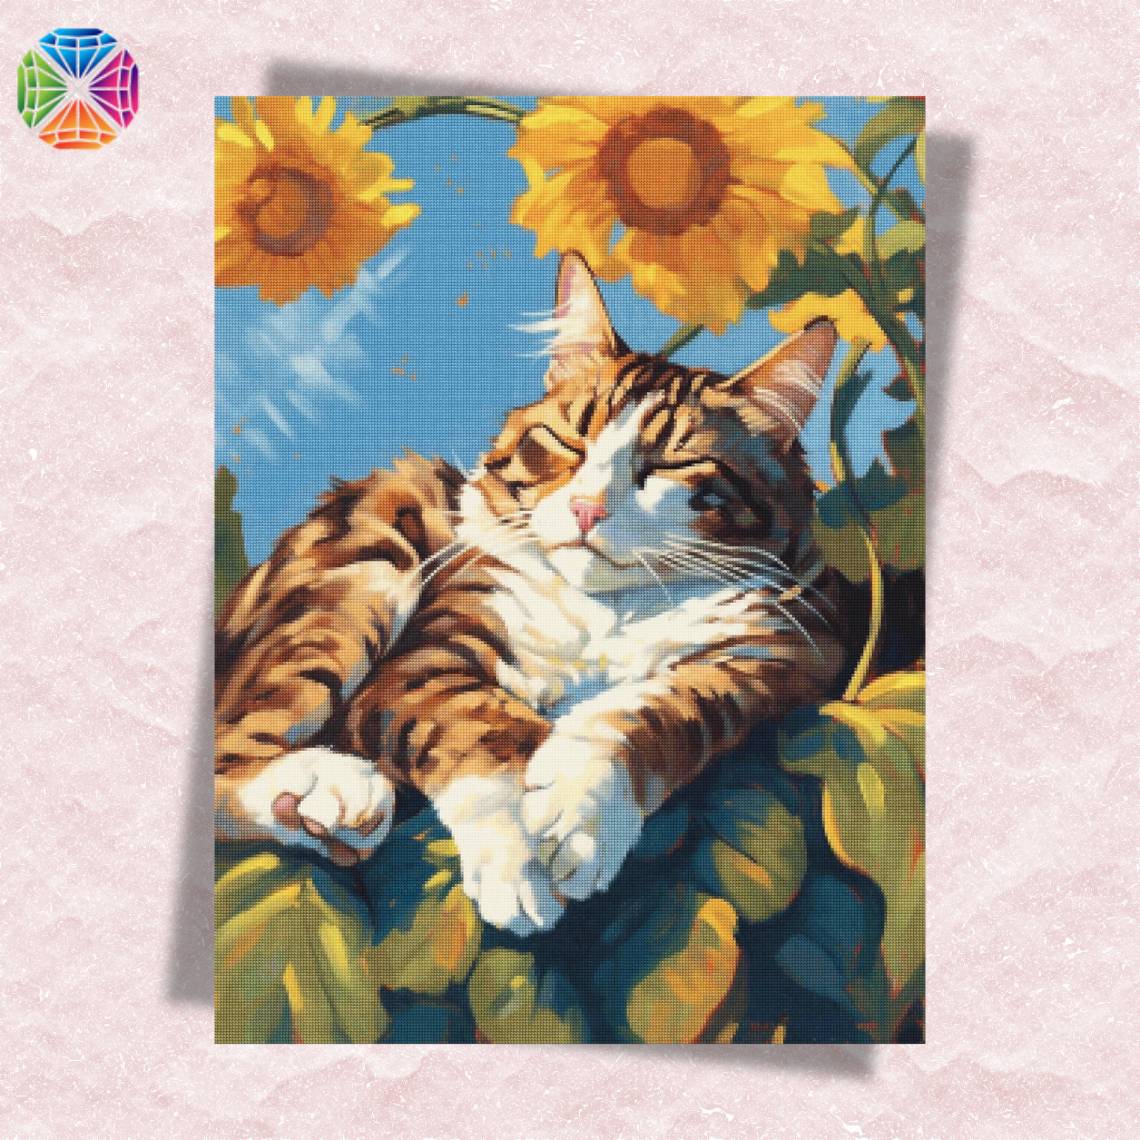 Sleeping Cat and Sunflowers - Diamond Painting